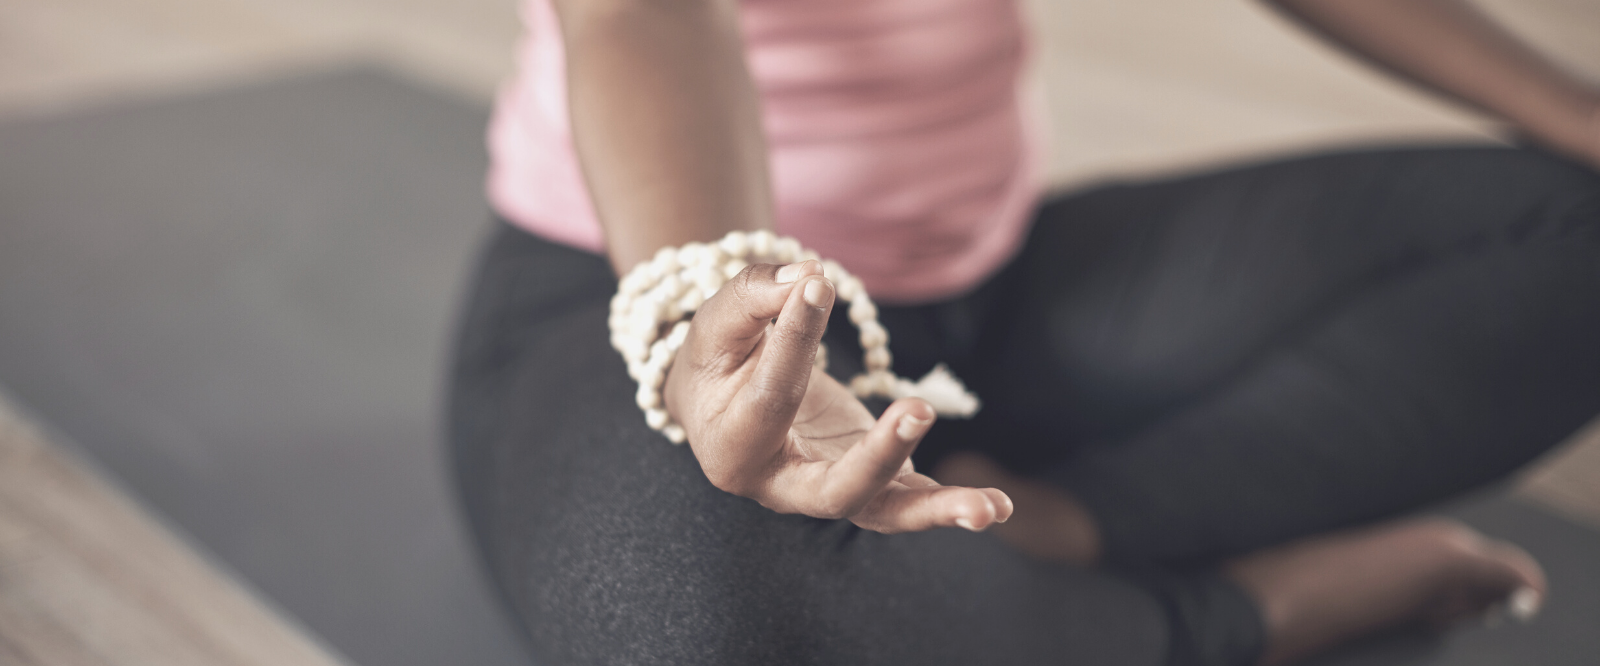 woman manifesting goals while meditating